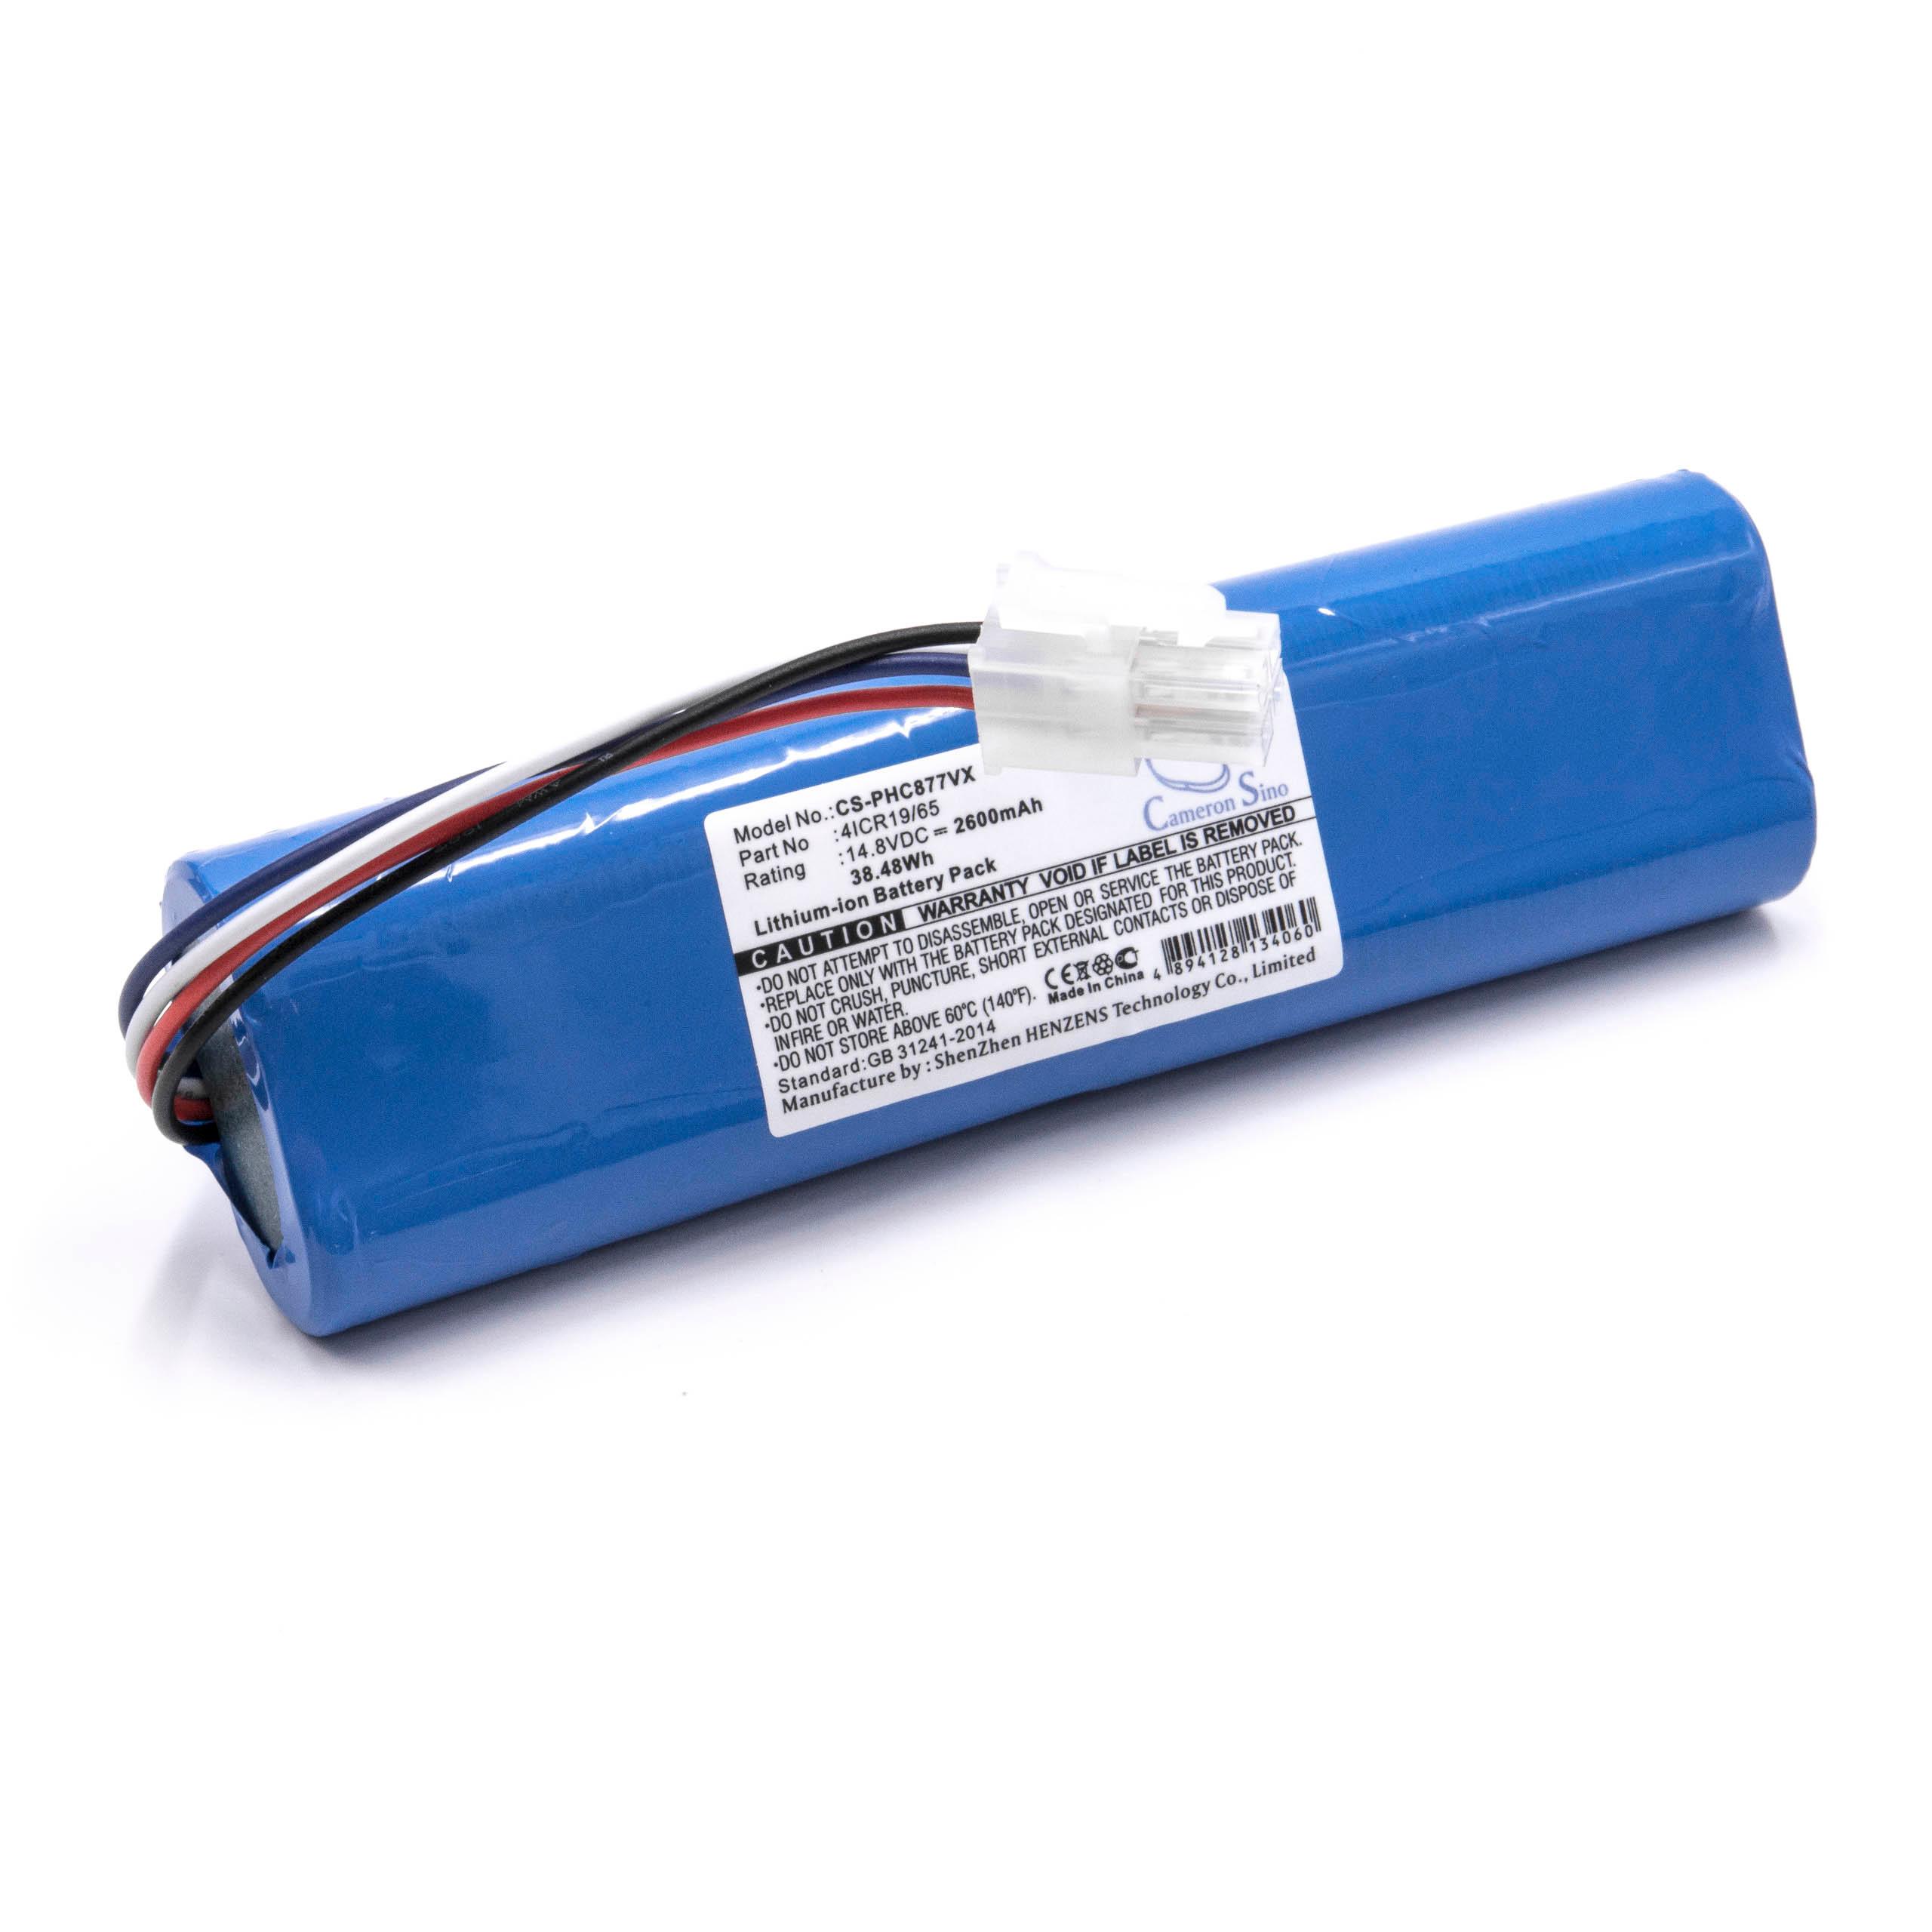 Batteria sostituisce Philips 4ICR19/65, CP0111/01 per aspirapolvere Philips - 2600mAh 14,8V Li-Ion